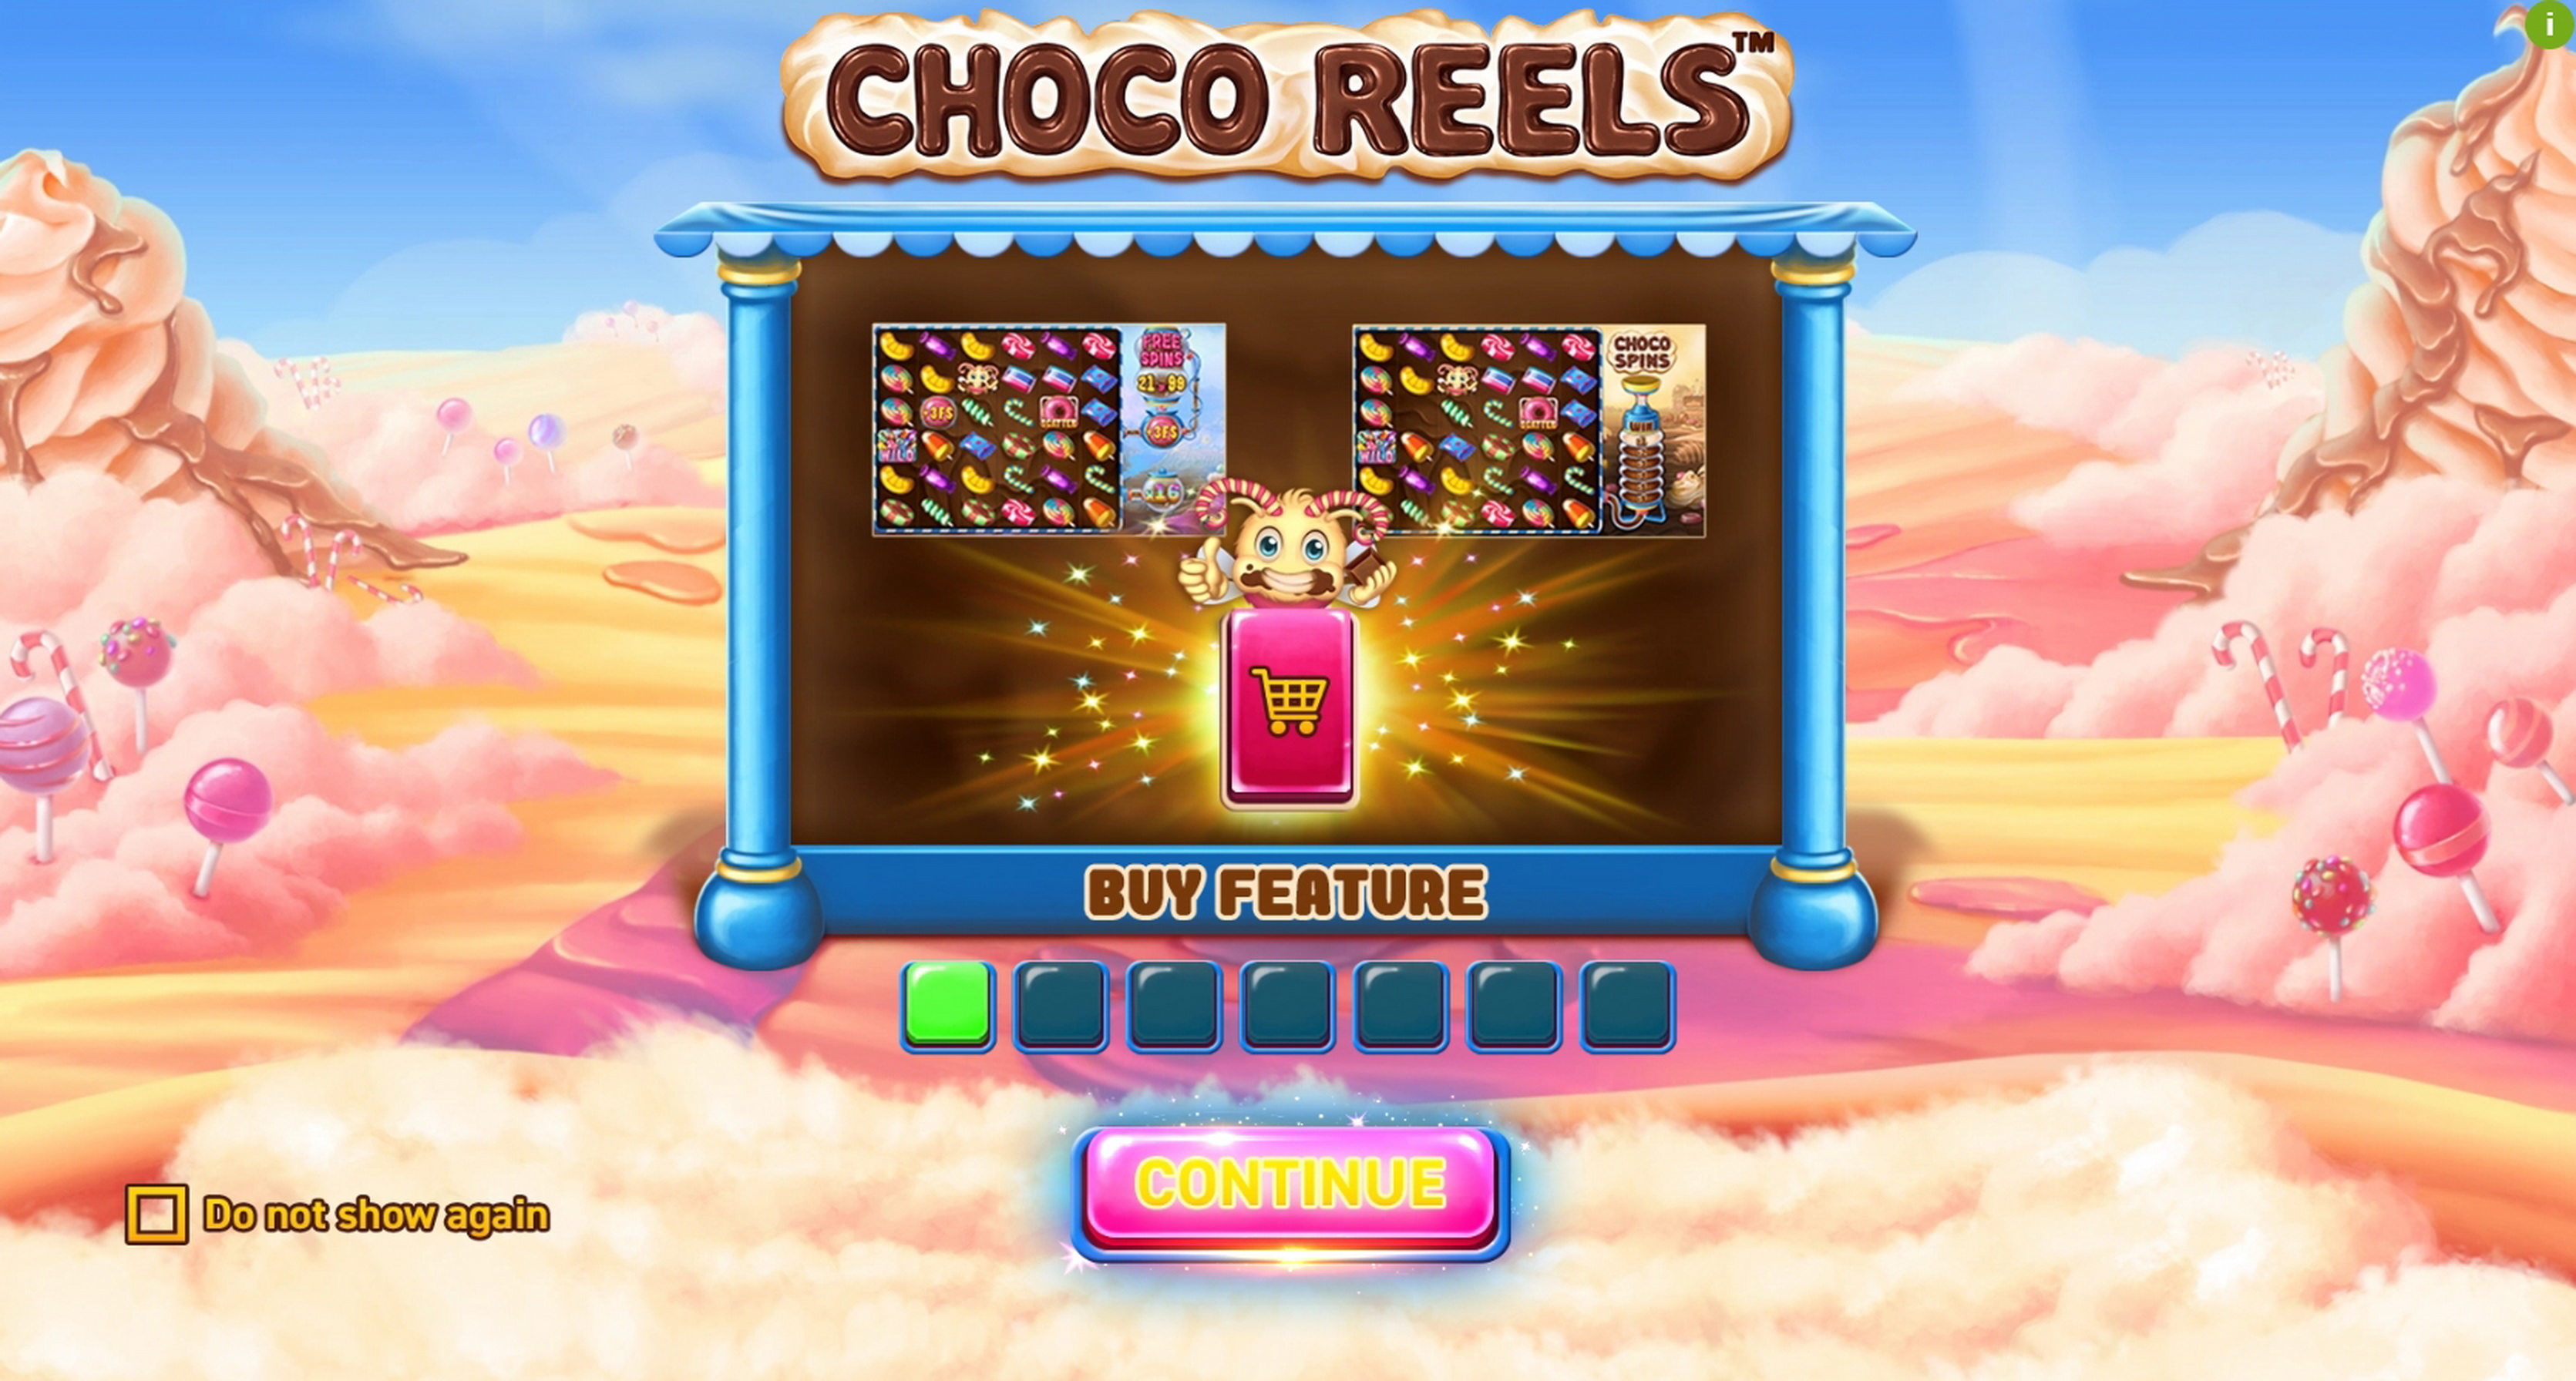 Play Choco Reels Free Casino Slot Game by Wazdan